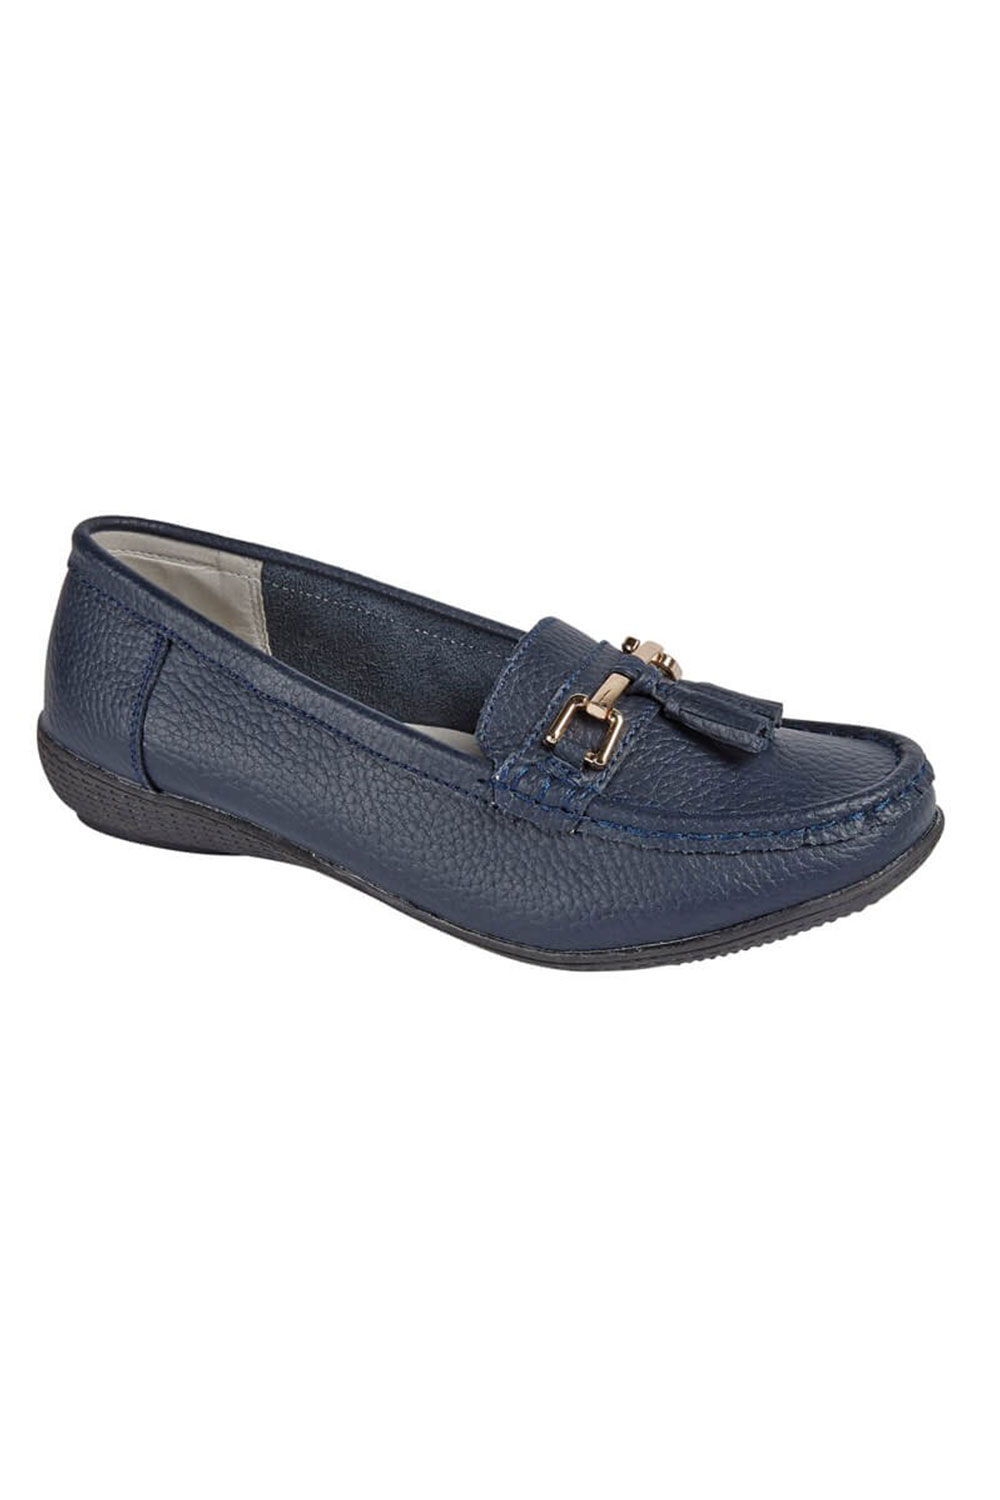 Jo & Joe Women’s Navy Blue Leather Moccasin Shoes with Tassel Detail, Size: 7